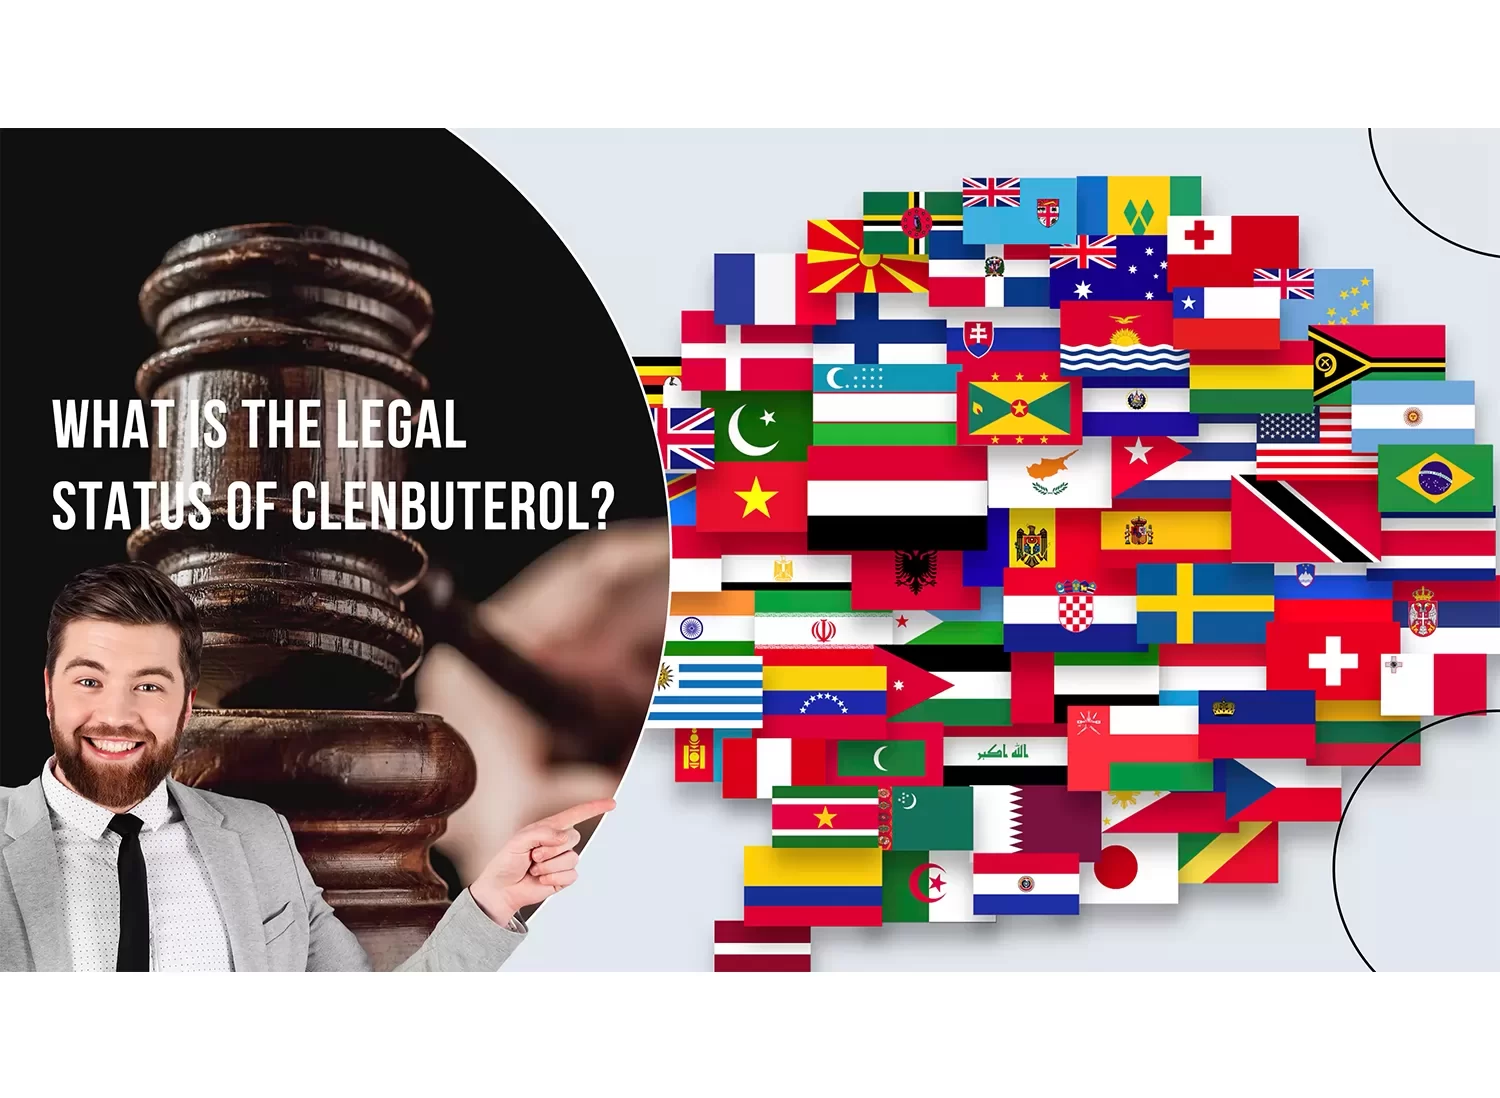 Legal status of Clenbuterol